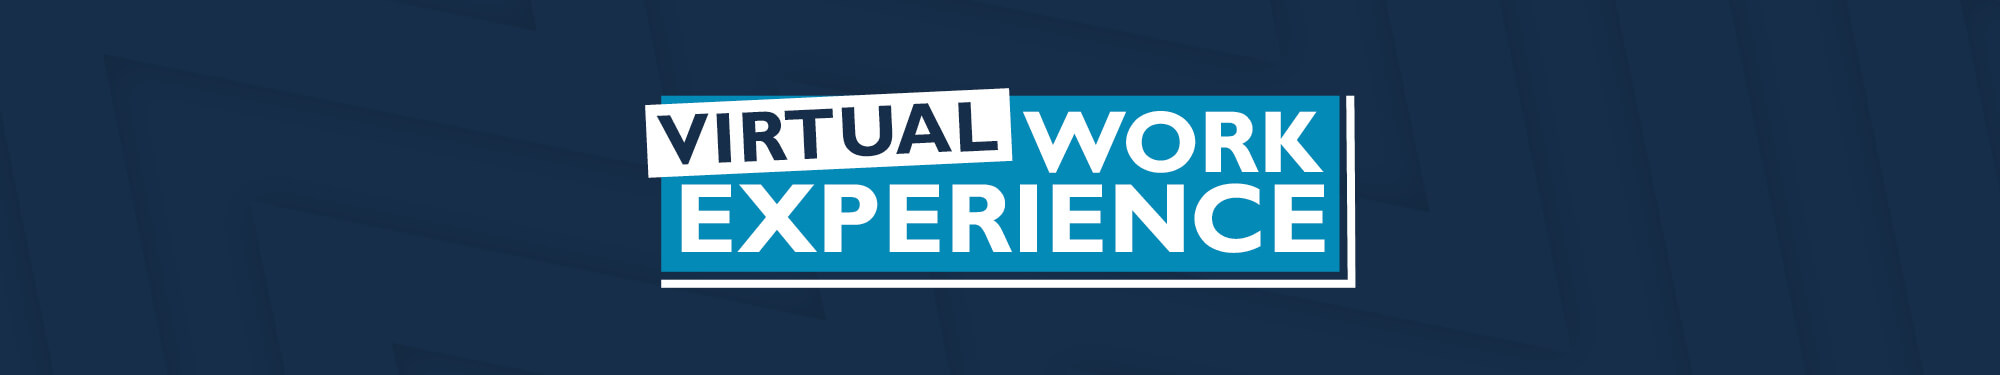 Virtual work experience logo on navy background